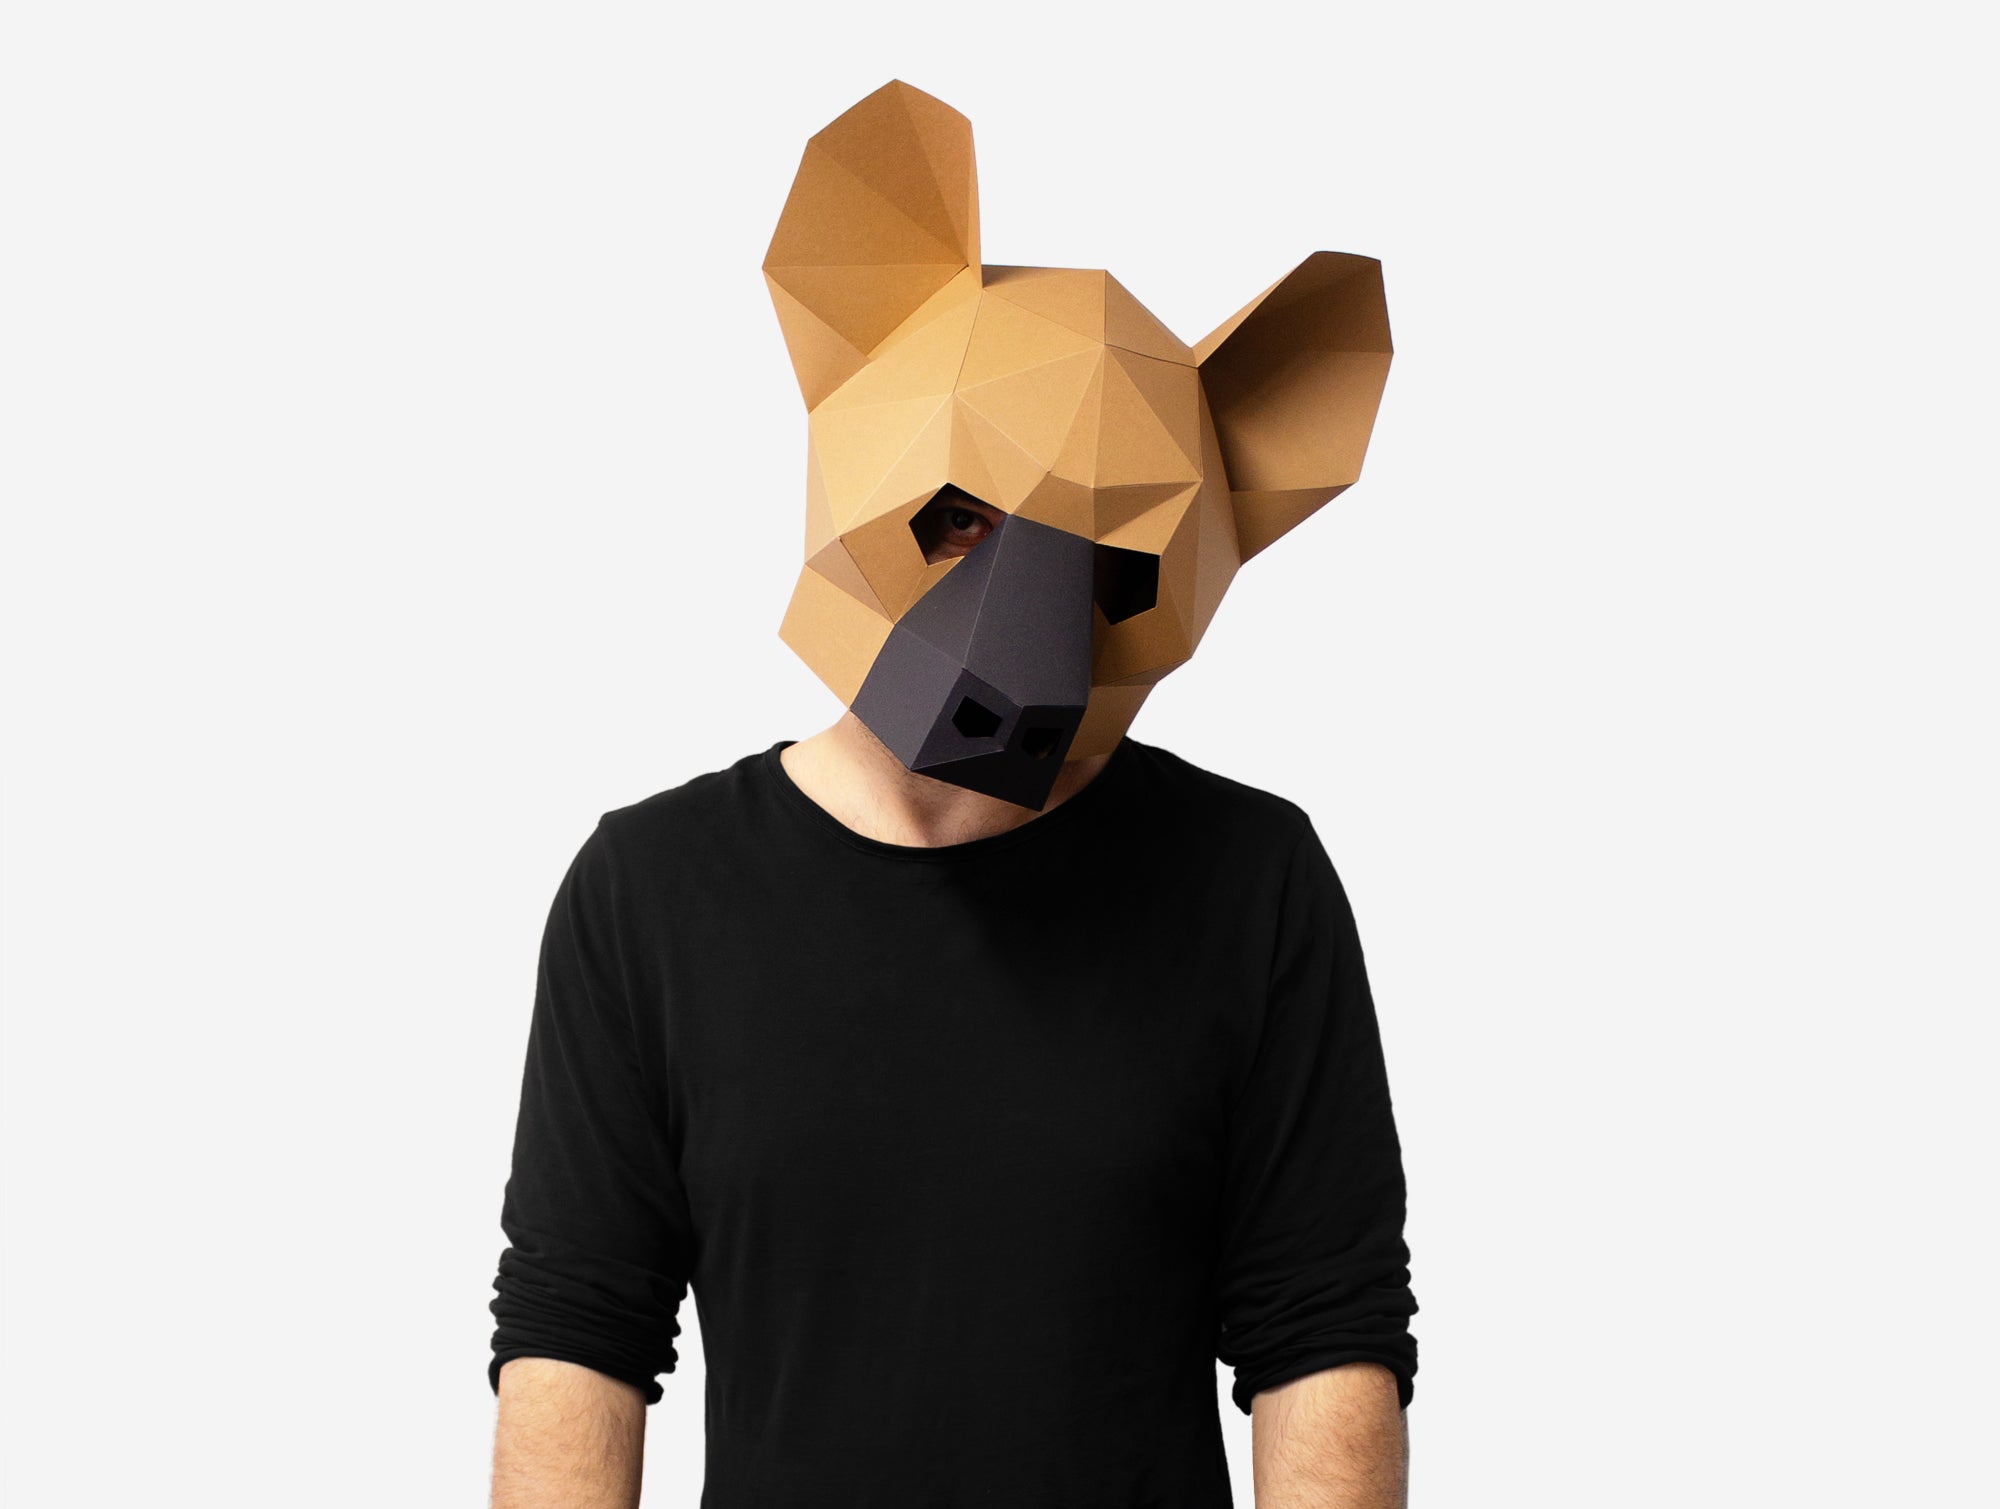 hyena-mask-diy-paper-mask-template-lapa-studios